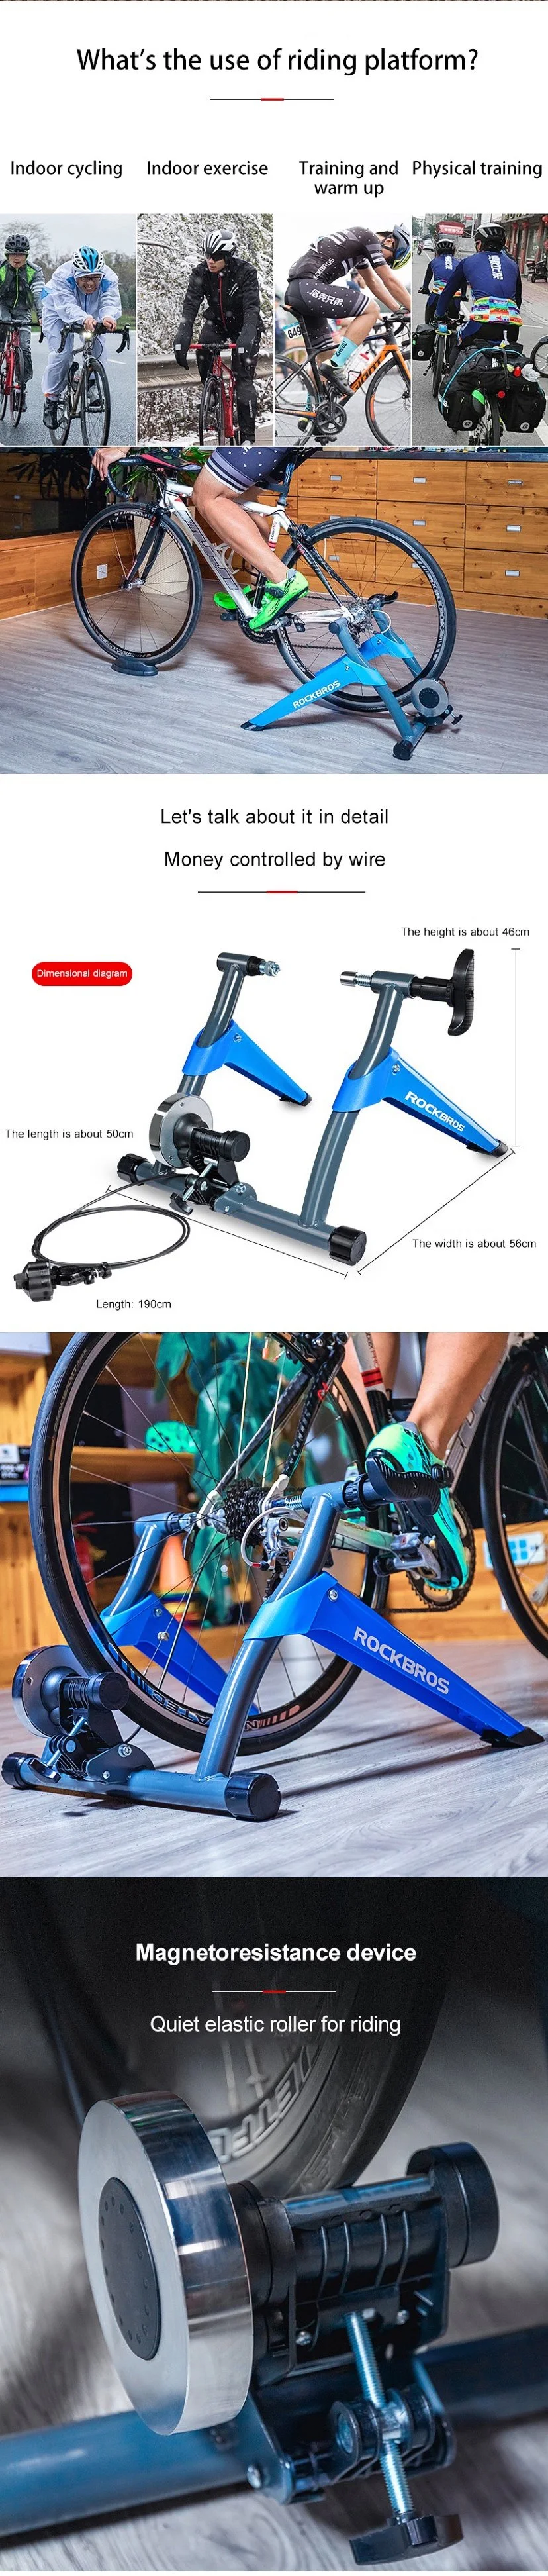 Rockbros Indoor Training Platform Bicycle Coach Mountain Bike Road Bike Training Magnetic Resistance